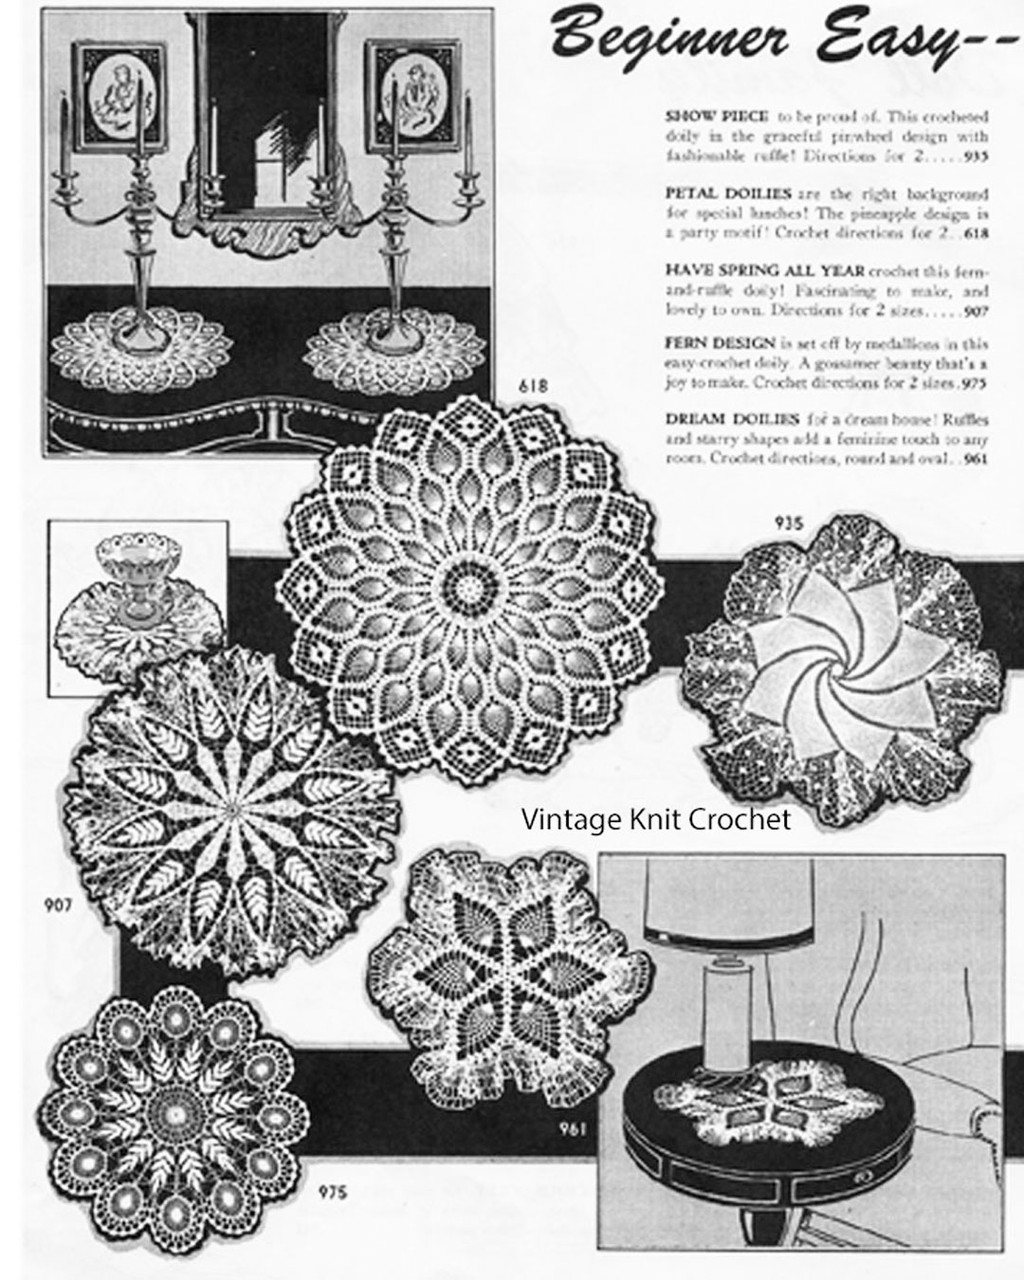 Crochet Fern Doily Design 975, 1962 Laura Wheeler Catalog Page